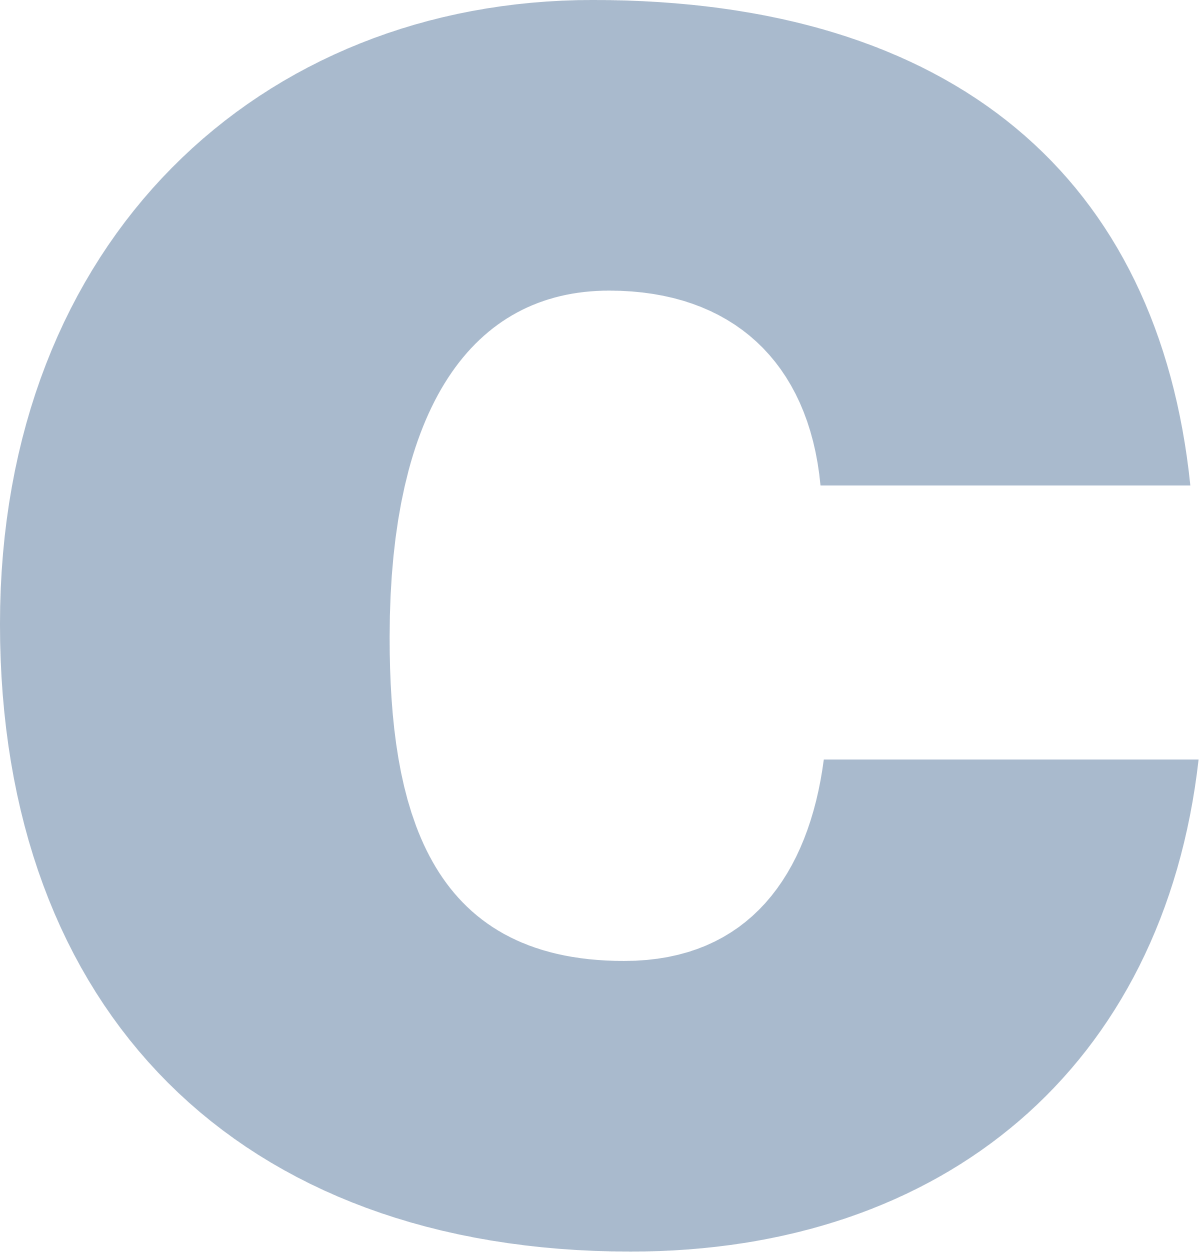 c programming language wikipedia